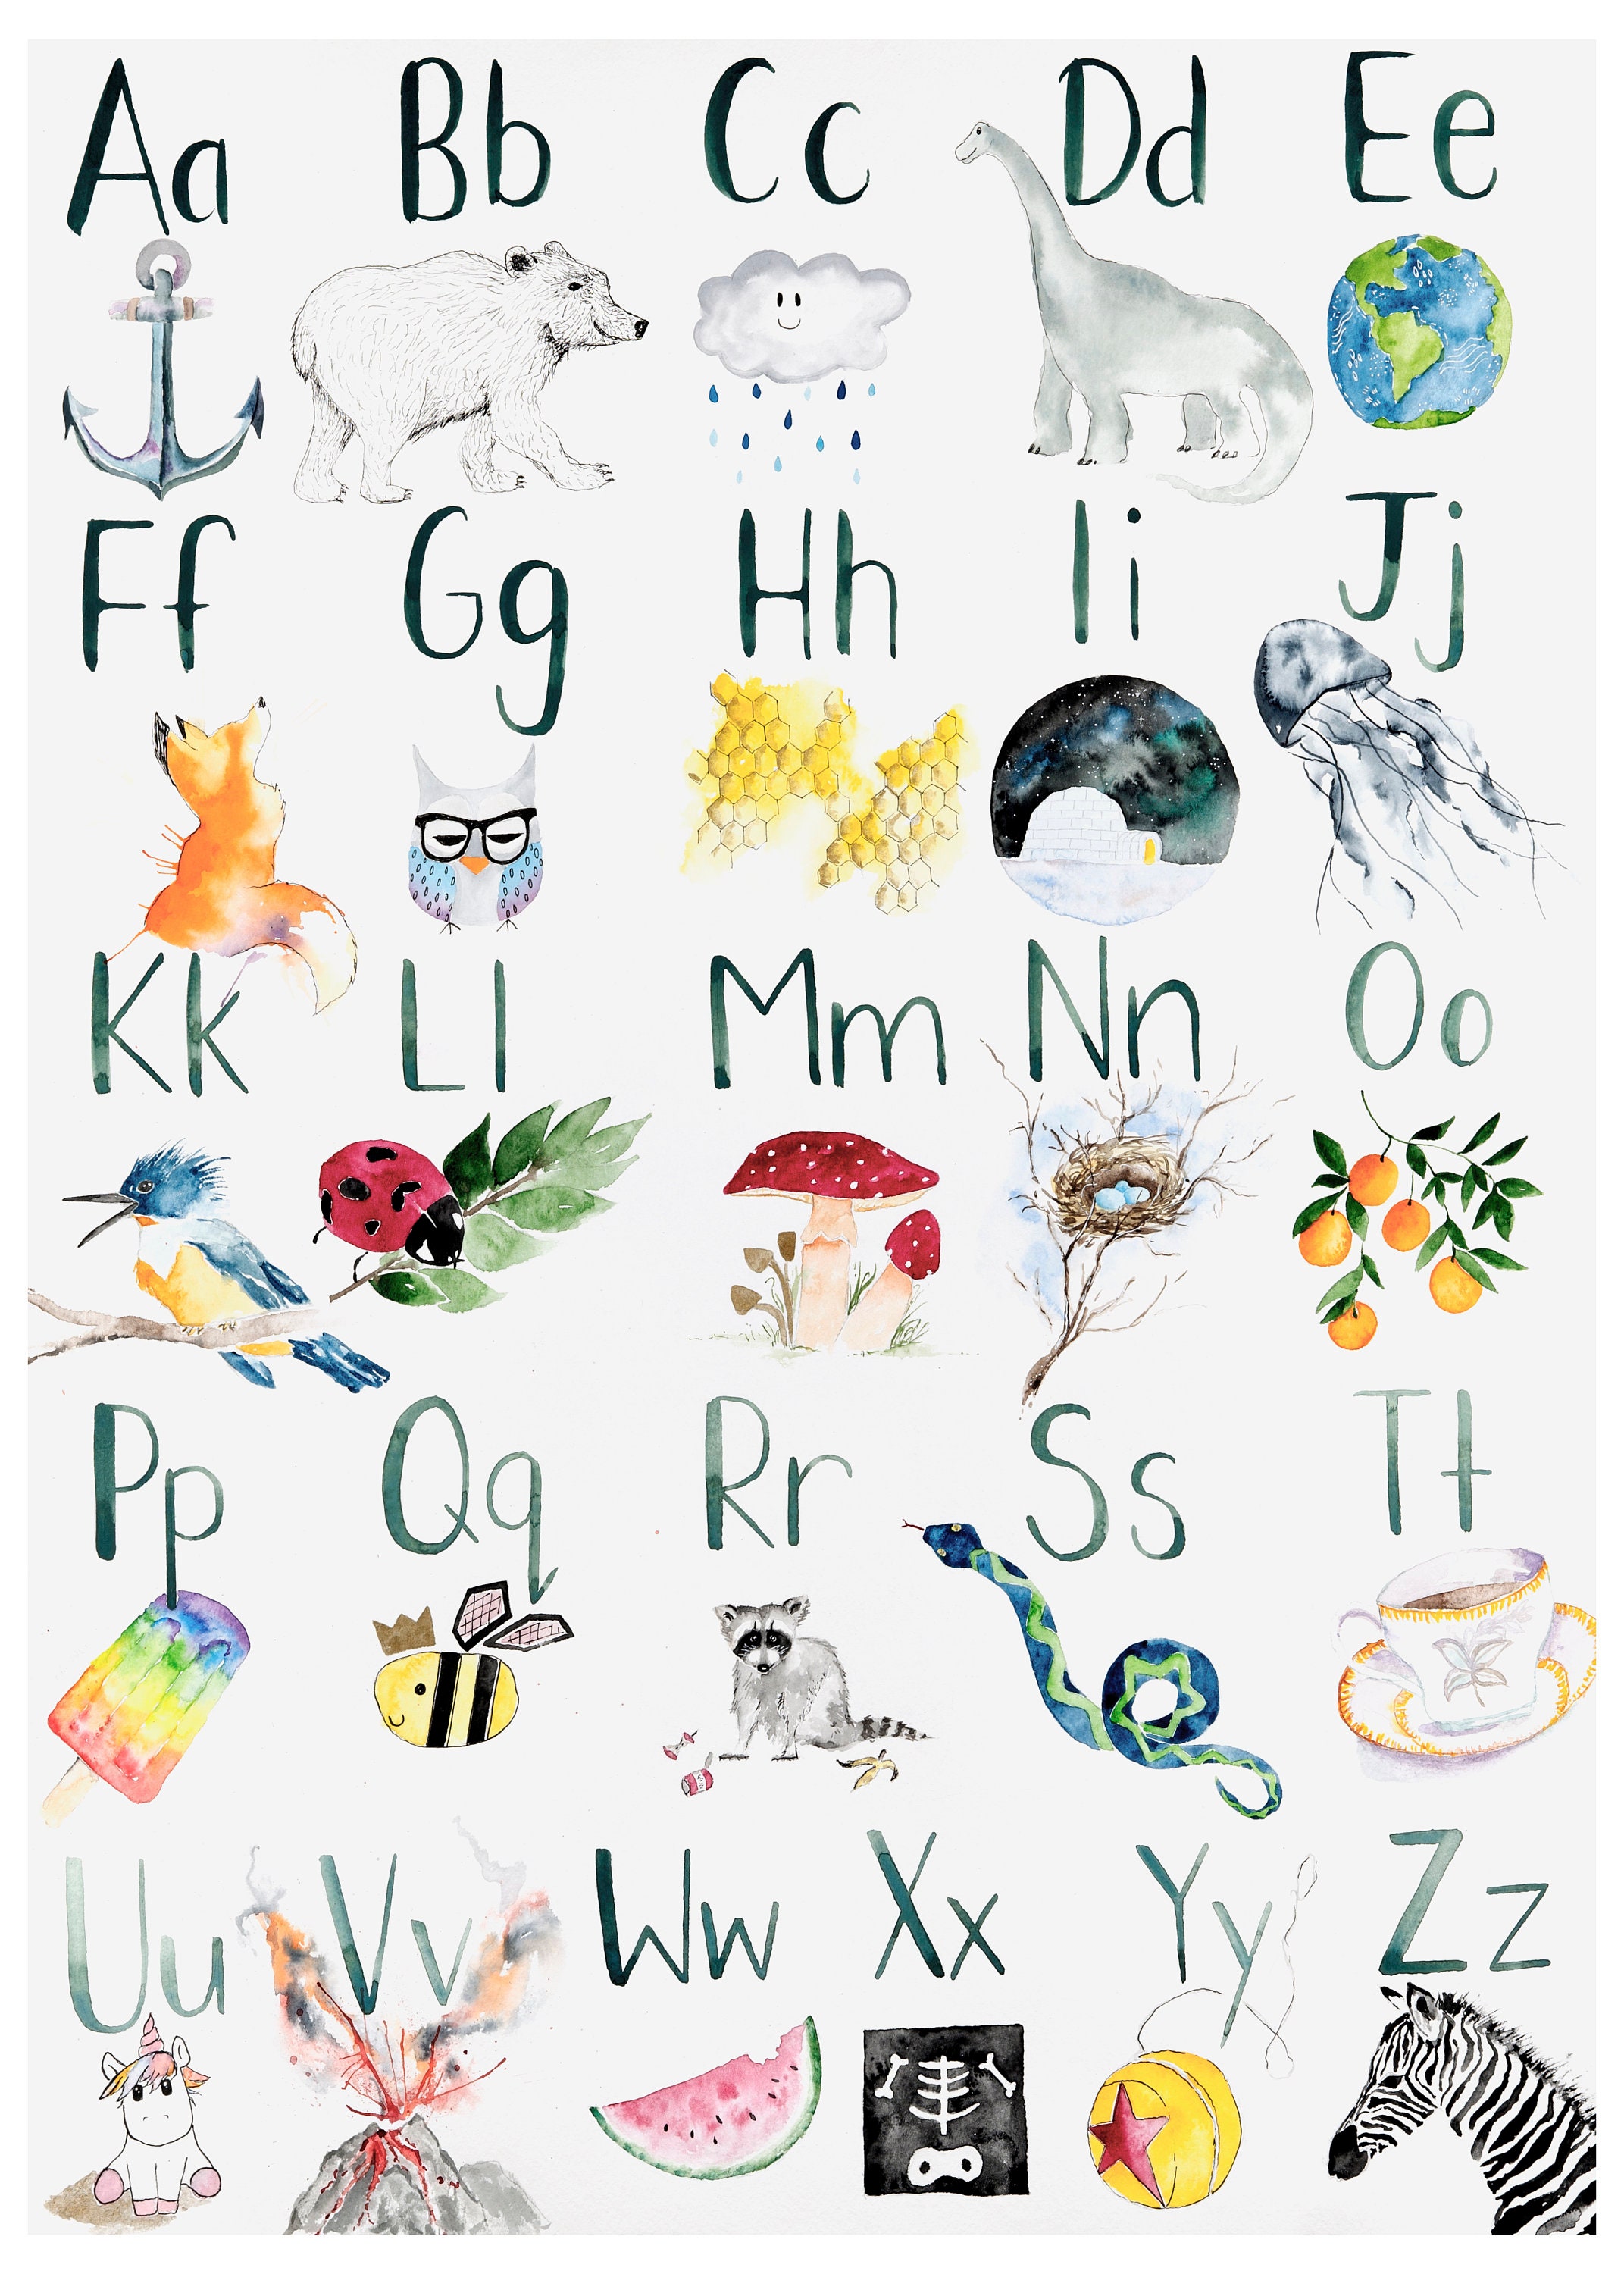 FREE Alphabet Posters - Watercolor – My Nerdy Teacher